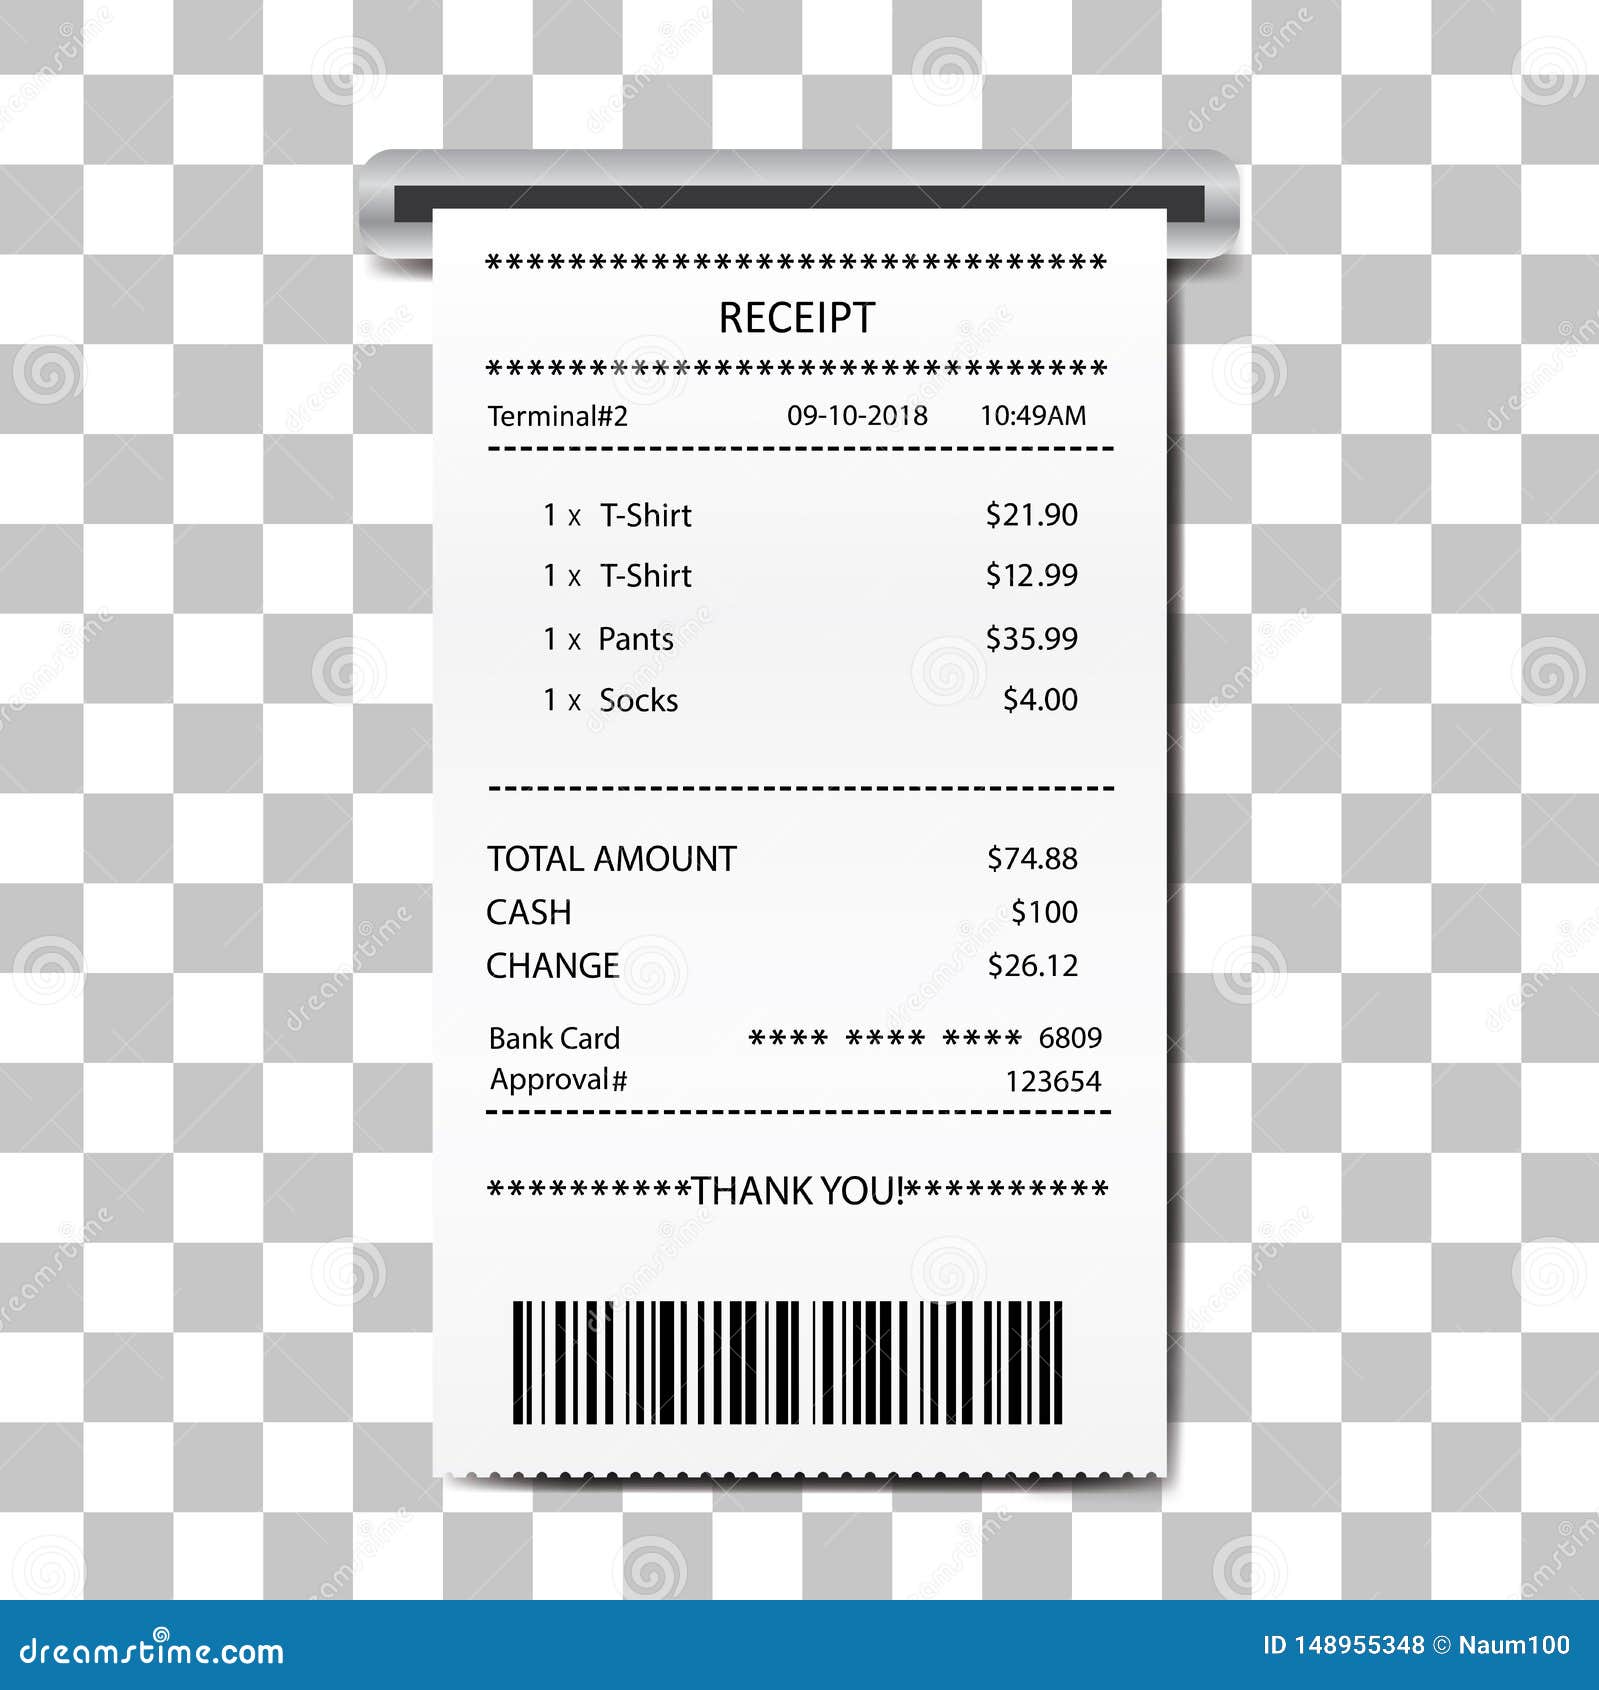 bill-receipt-template-collection